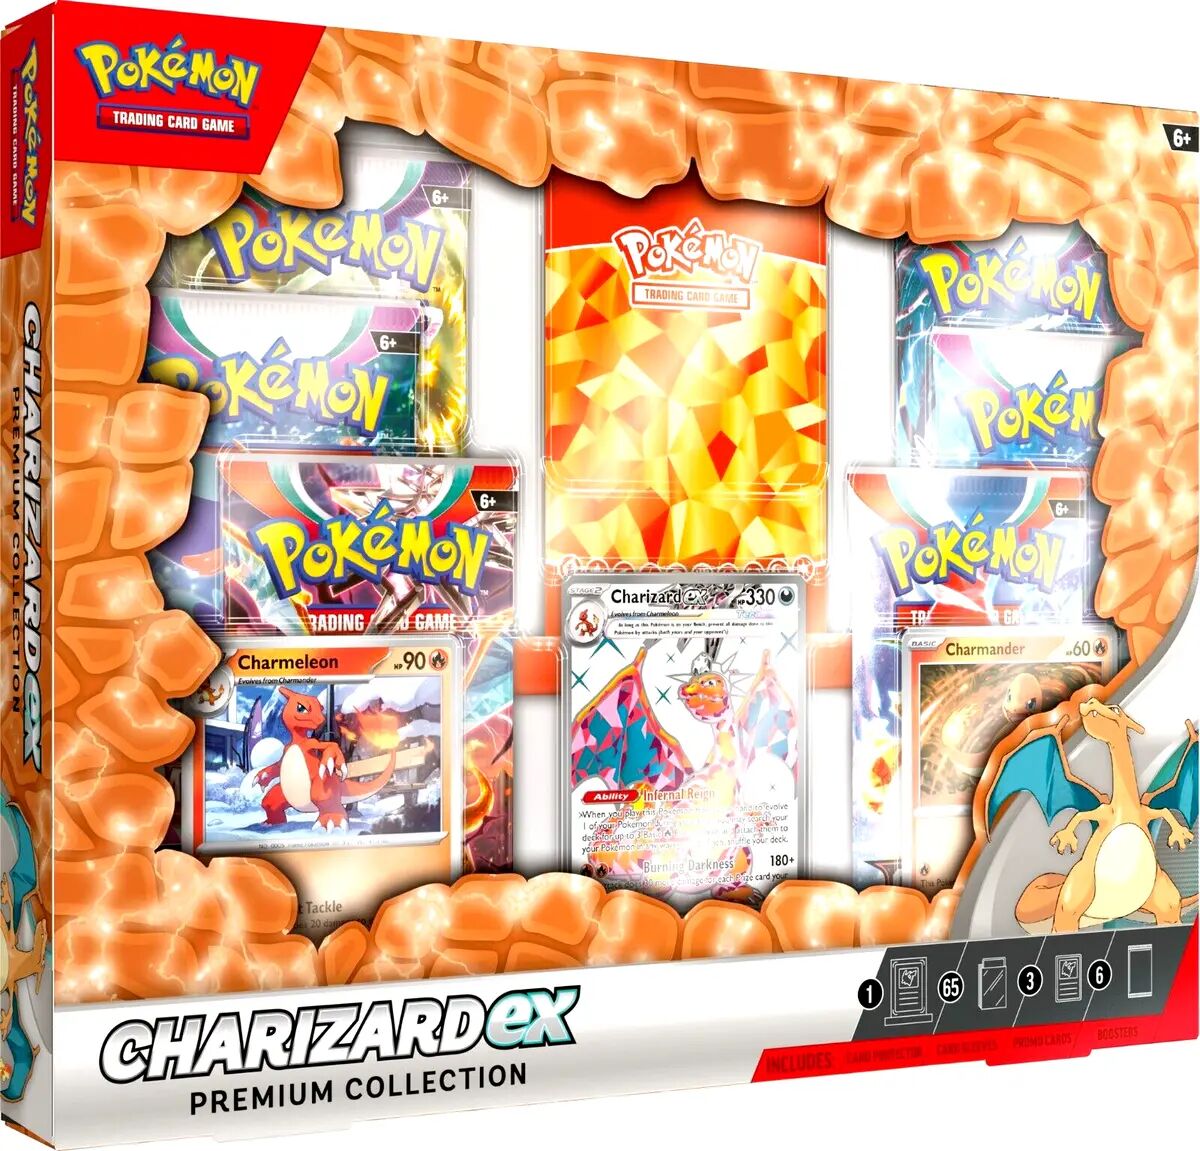 Pokémon Charizard EX Premium Collection Box - EN